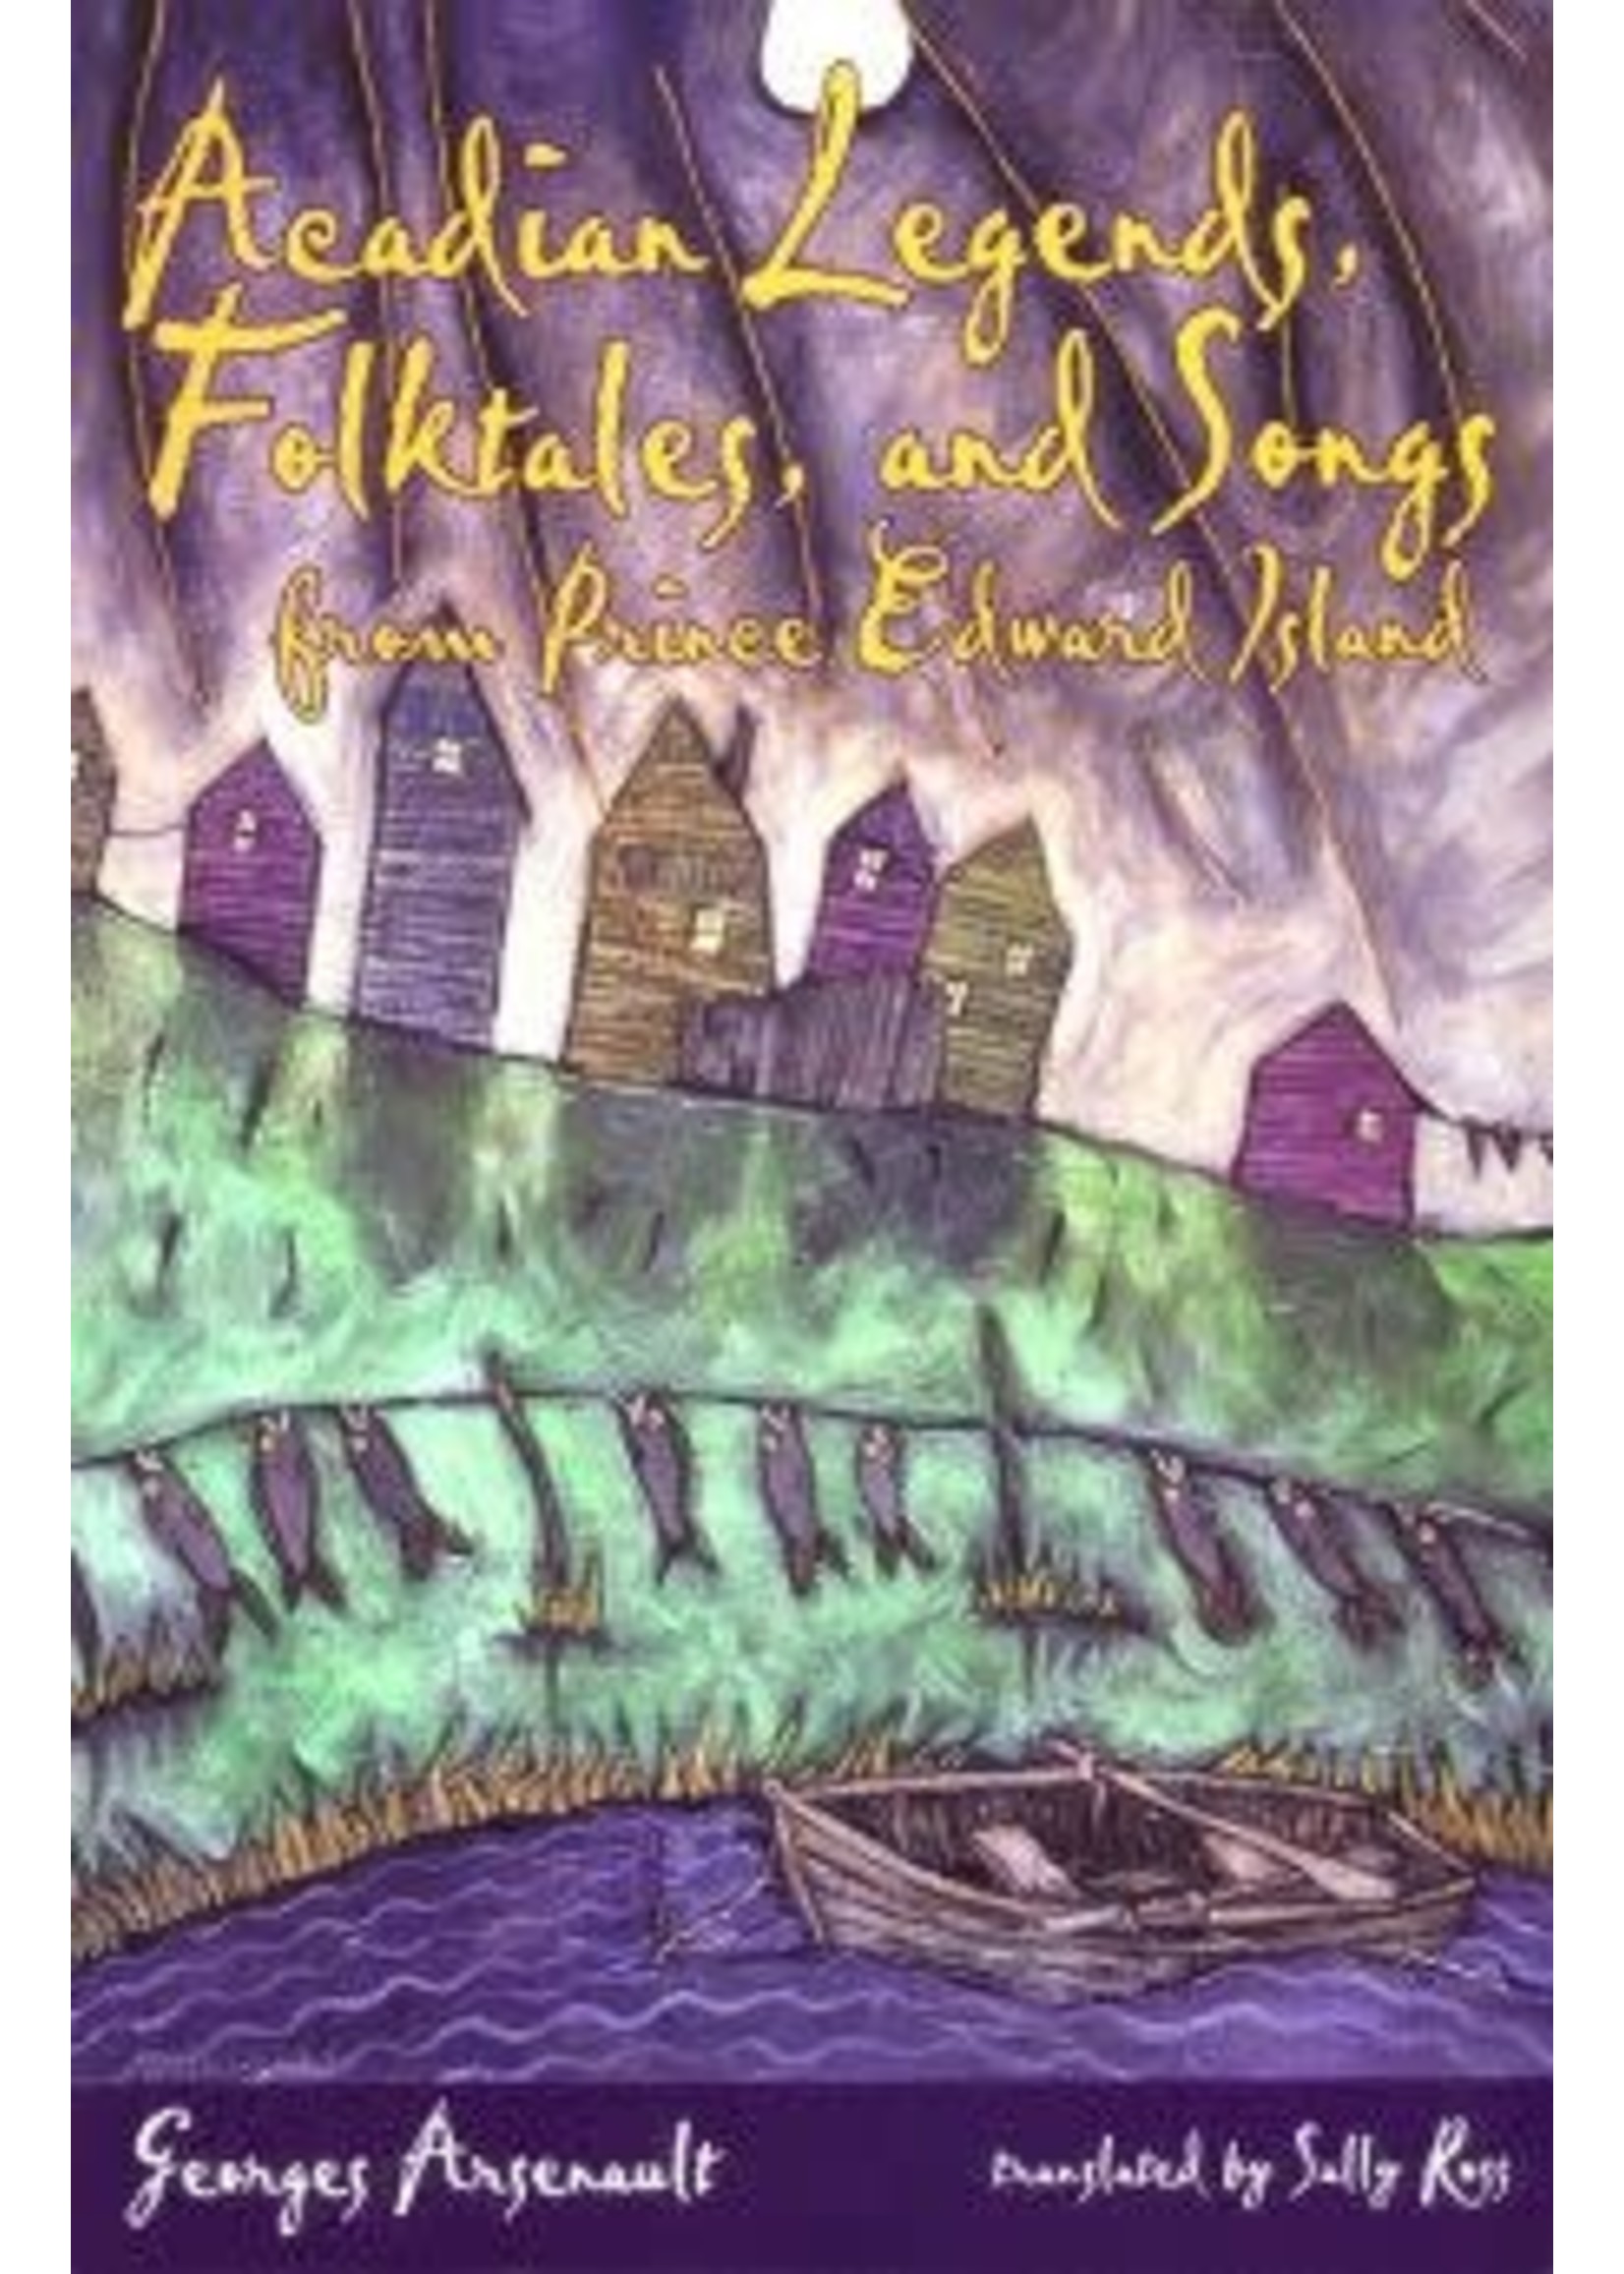 Acadian Legends, Folktales and Songs by George Arsenault